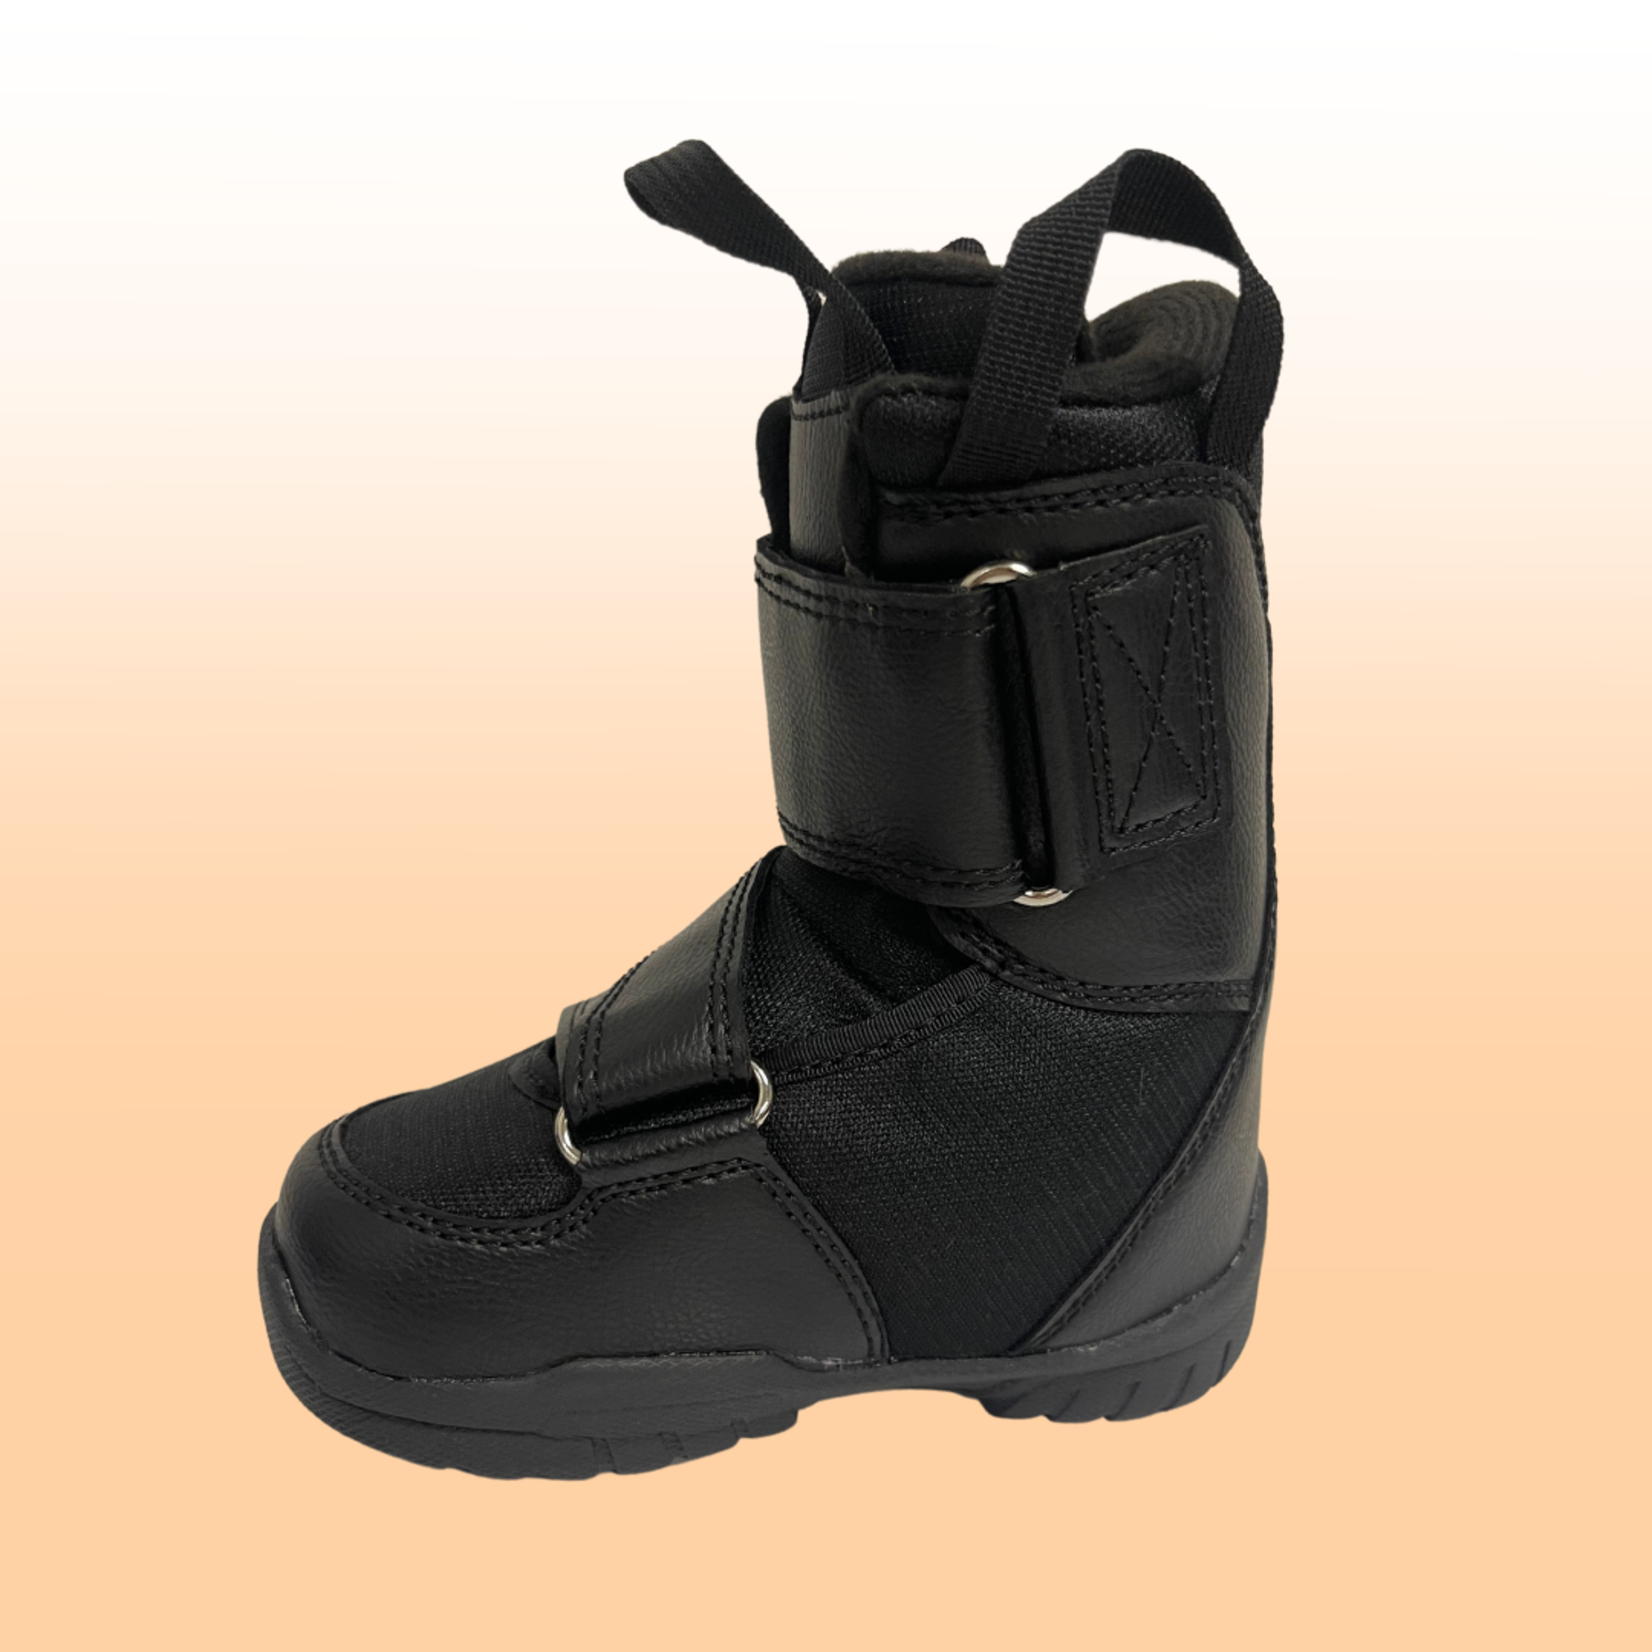 Rocky Mountain Designs NEW 2024 Rocky Mountain Designs Kids Slush Snowboard Boots